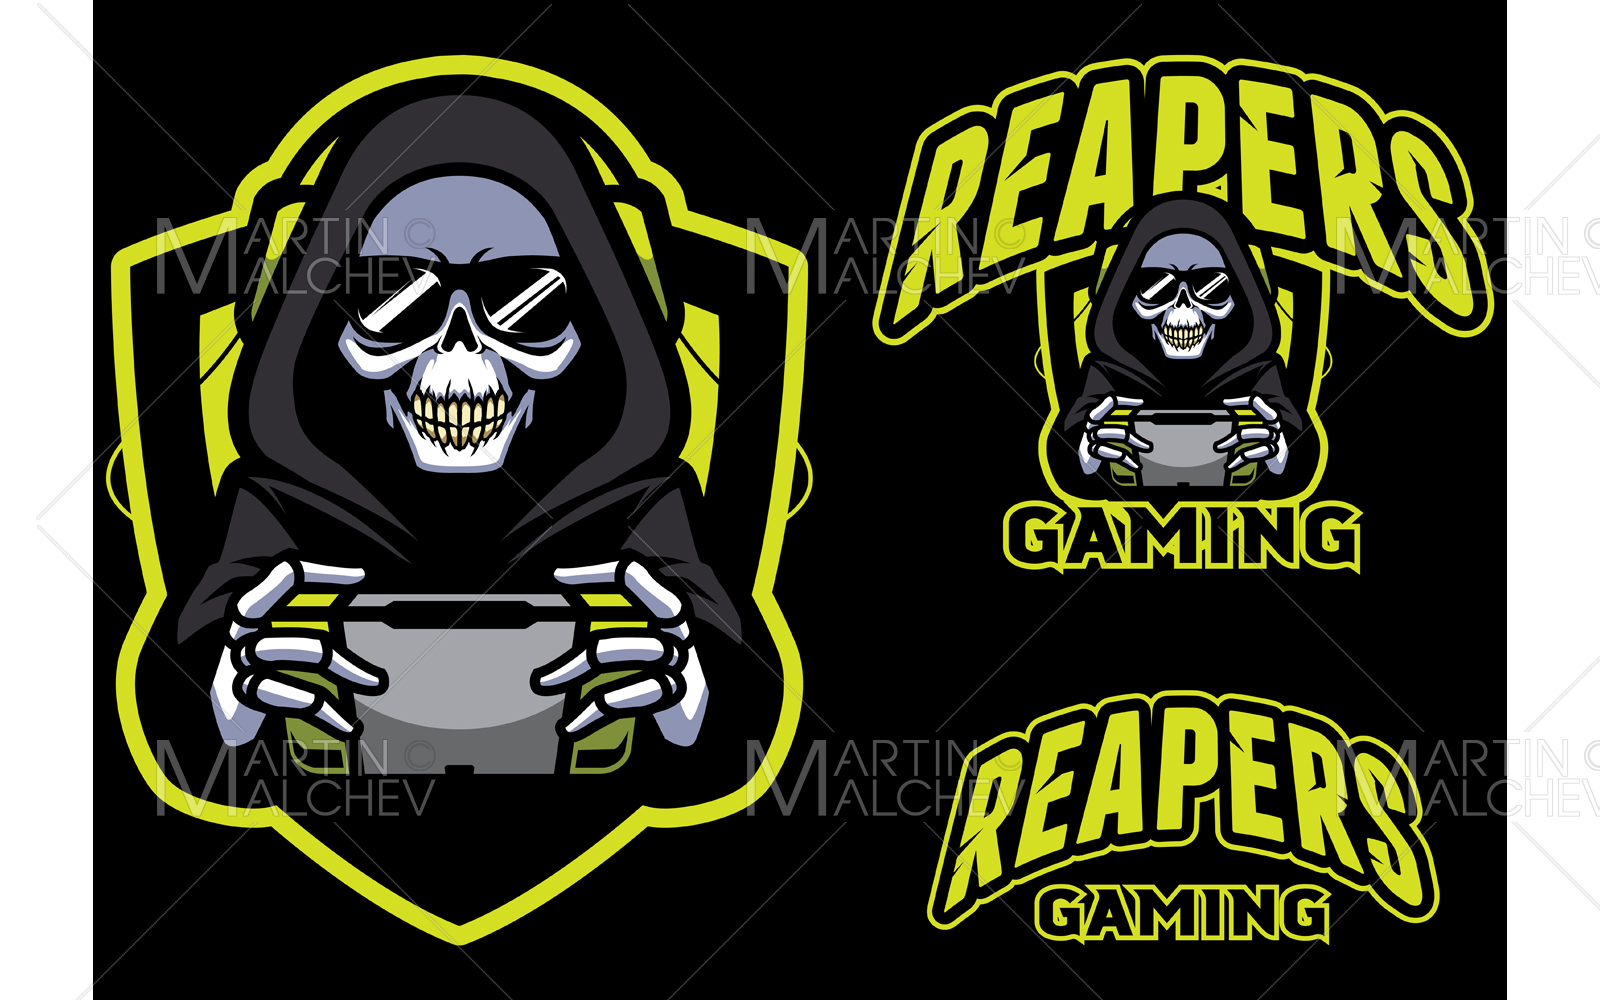 Reapers Gaming Mascot Vector Illustration